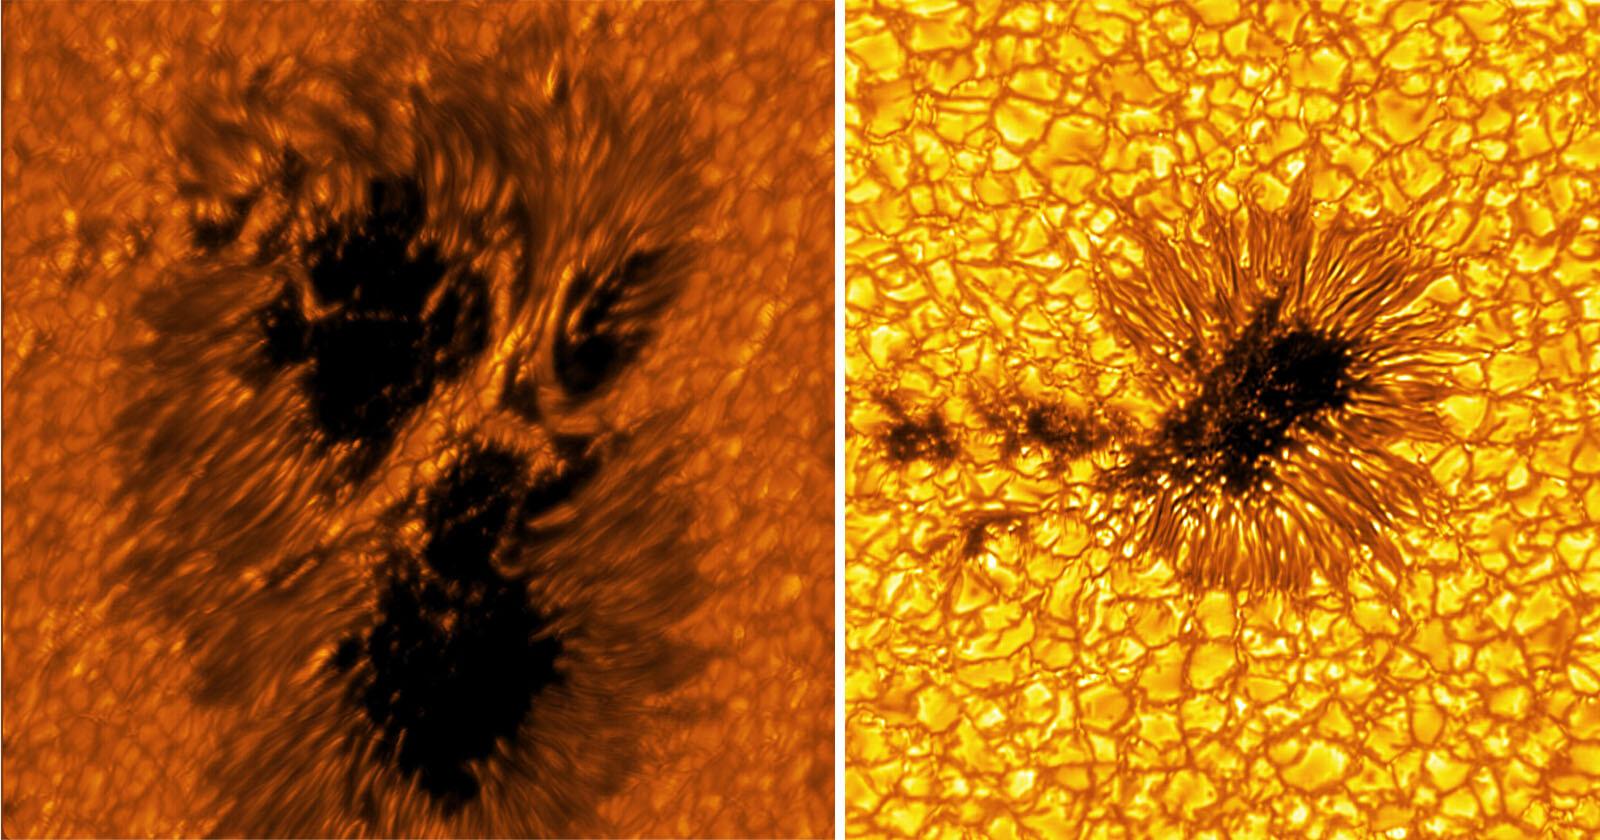  world most powerful solar telescope captures hellish photos 